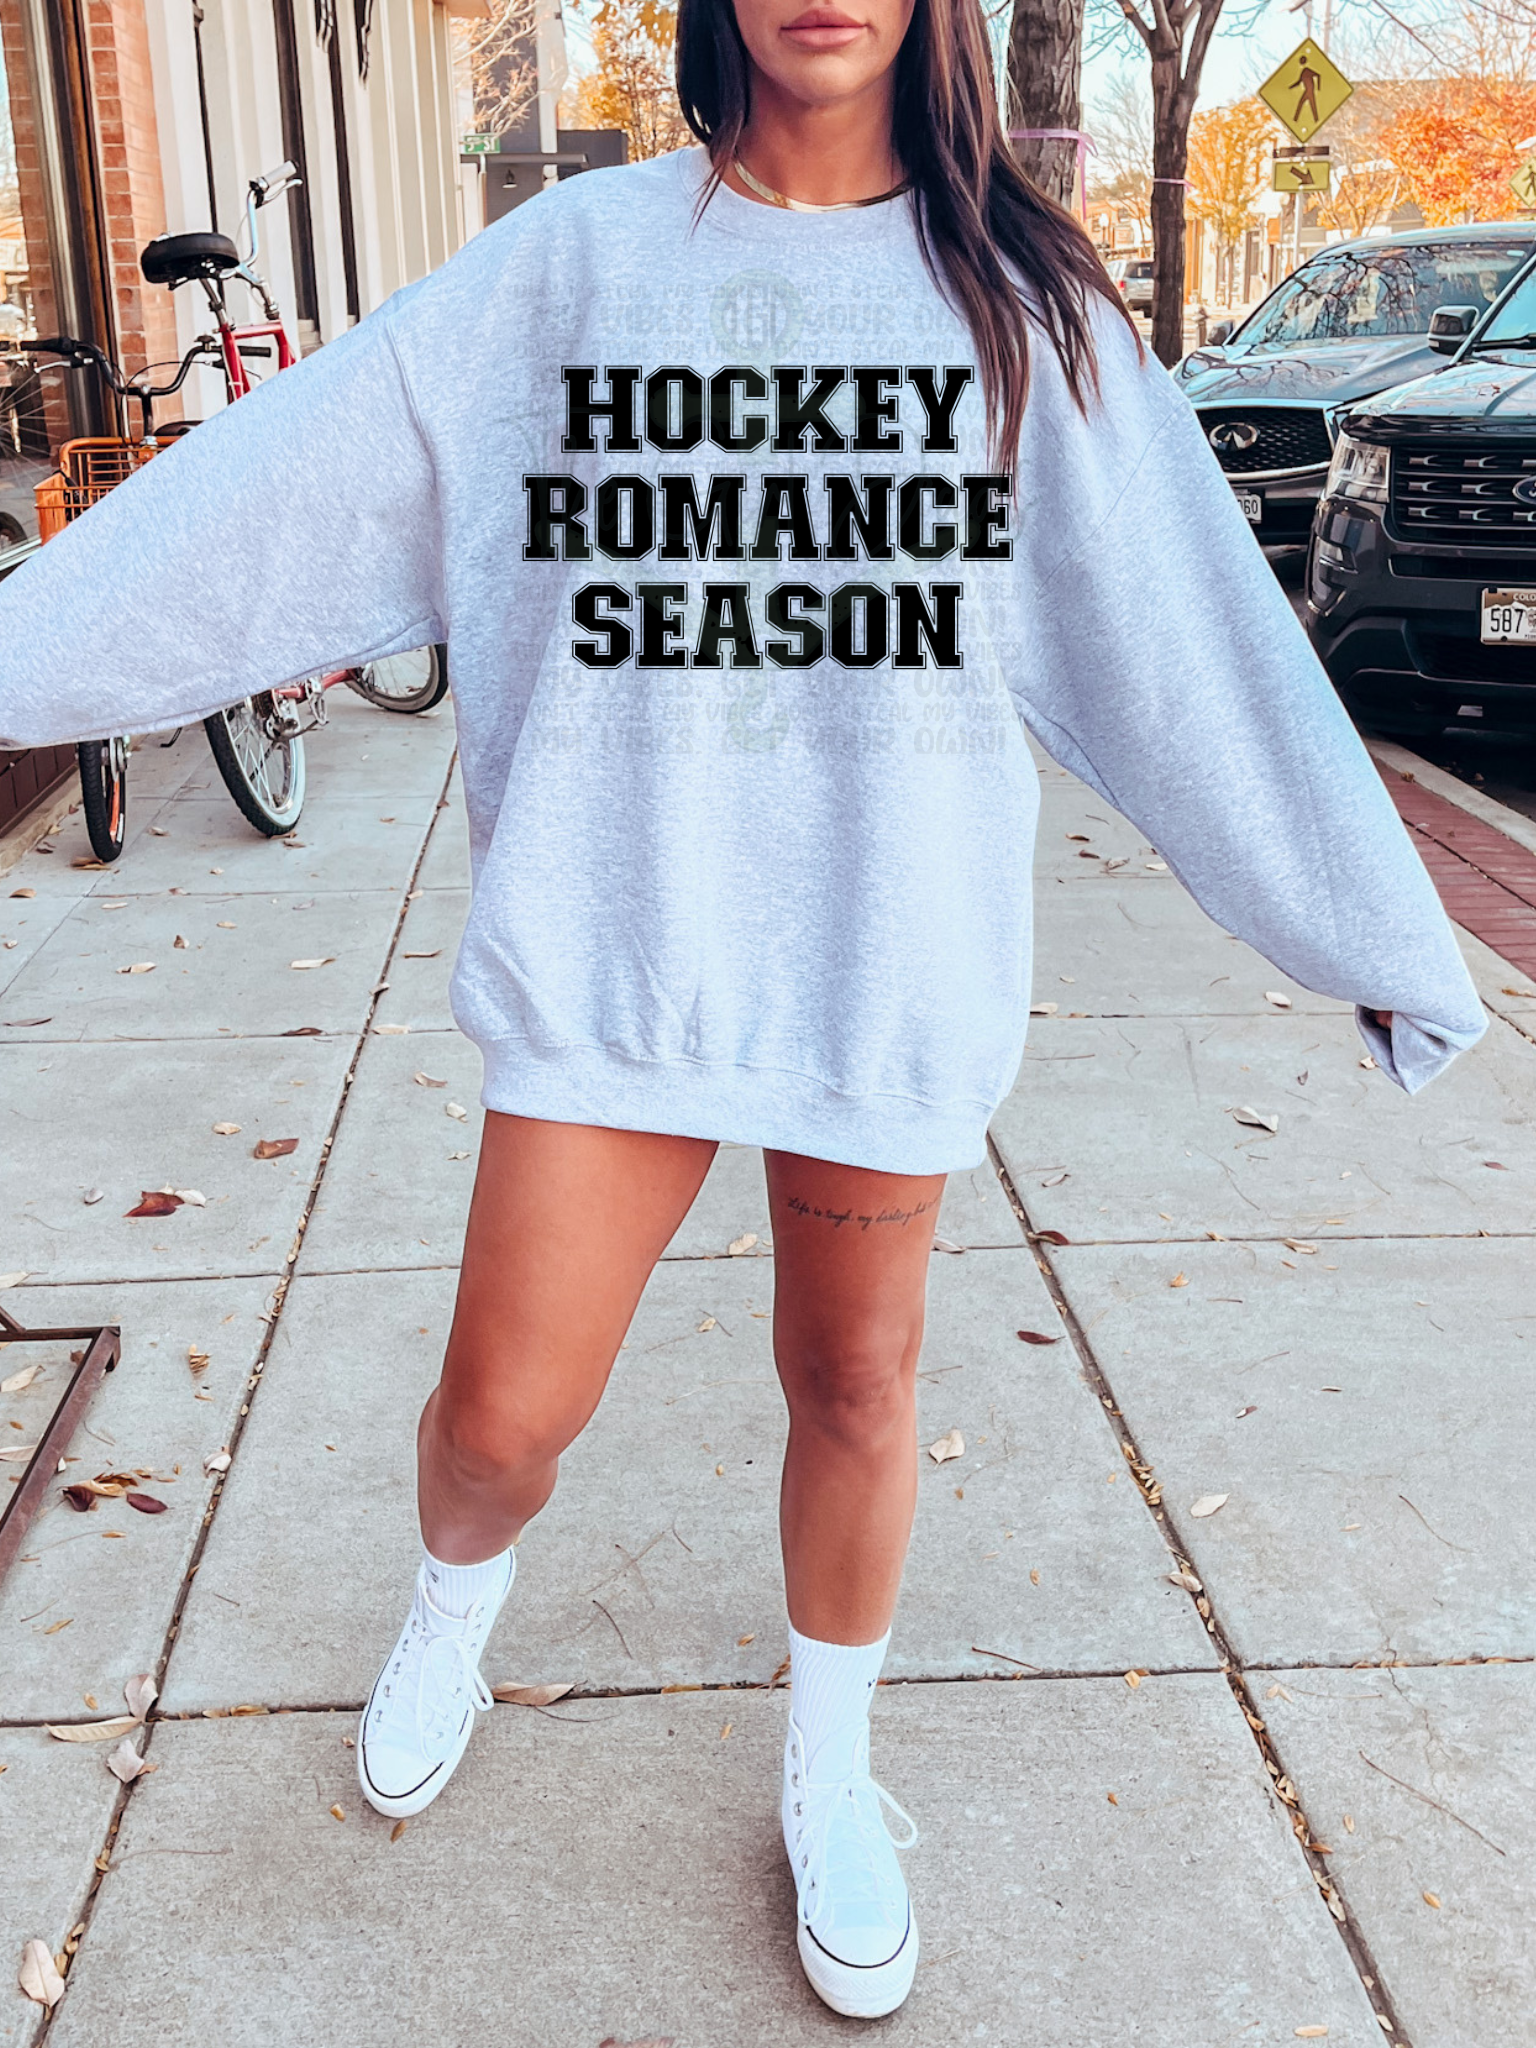 Hockey Romance Season Top Design